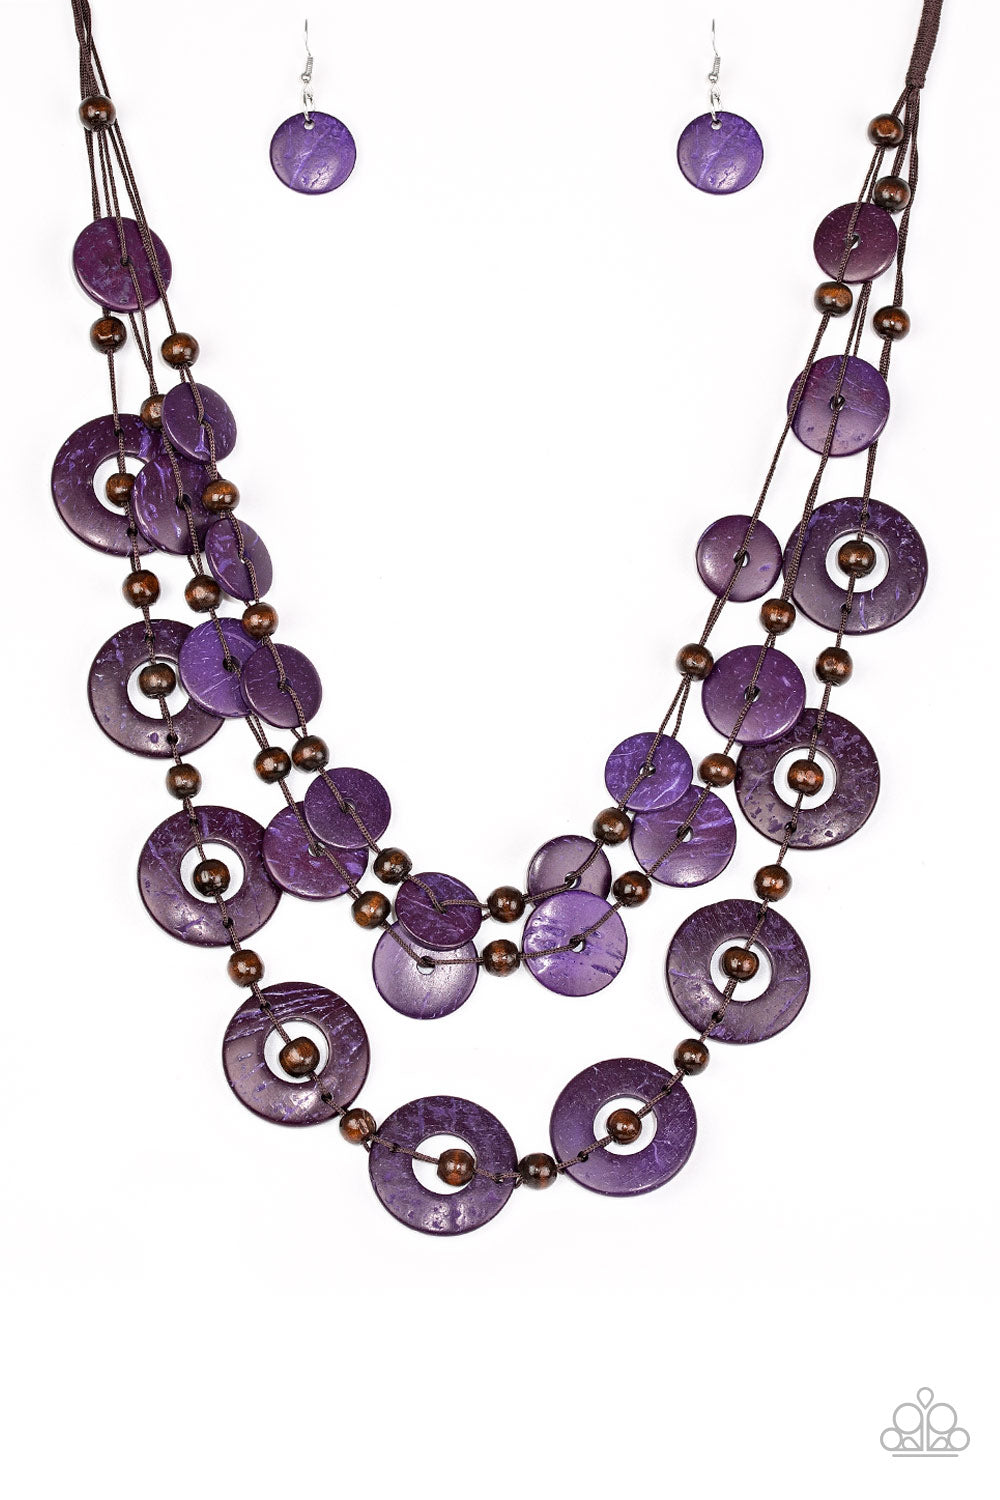 Catalina Coastin' - Purple Necklace